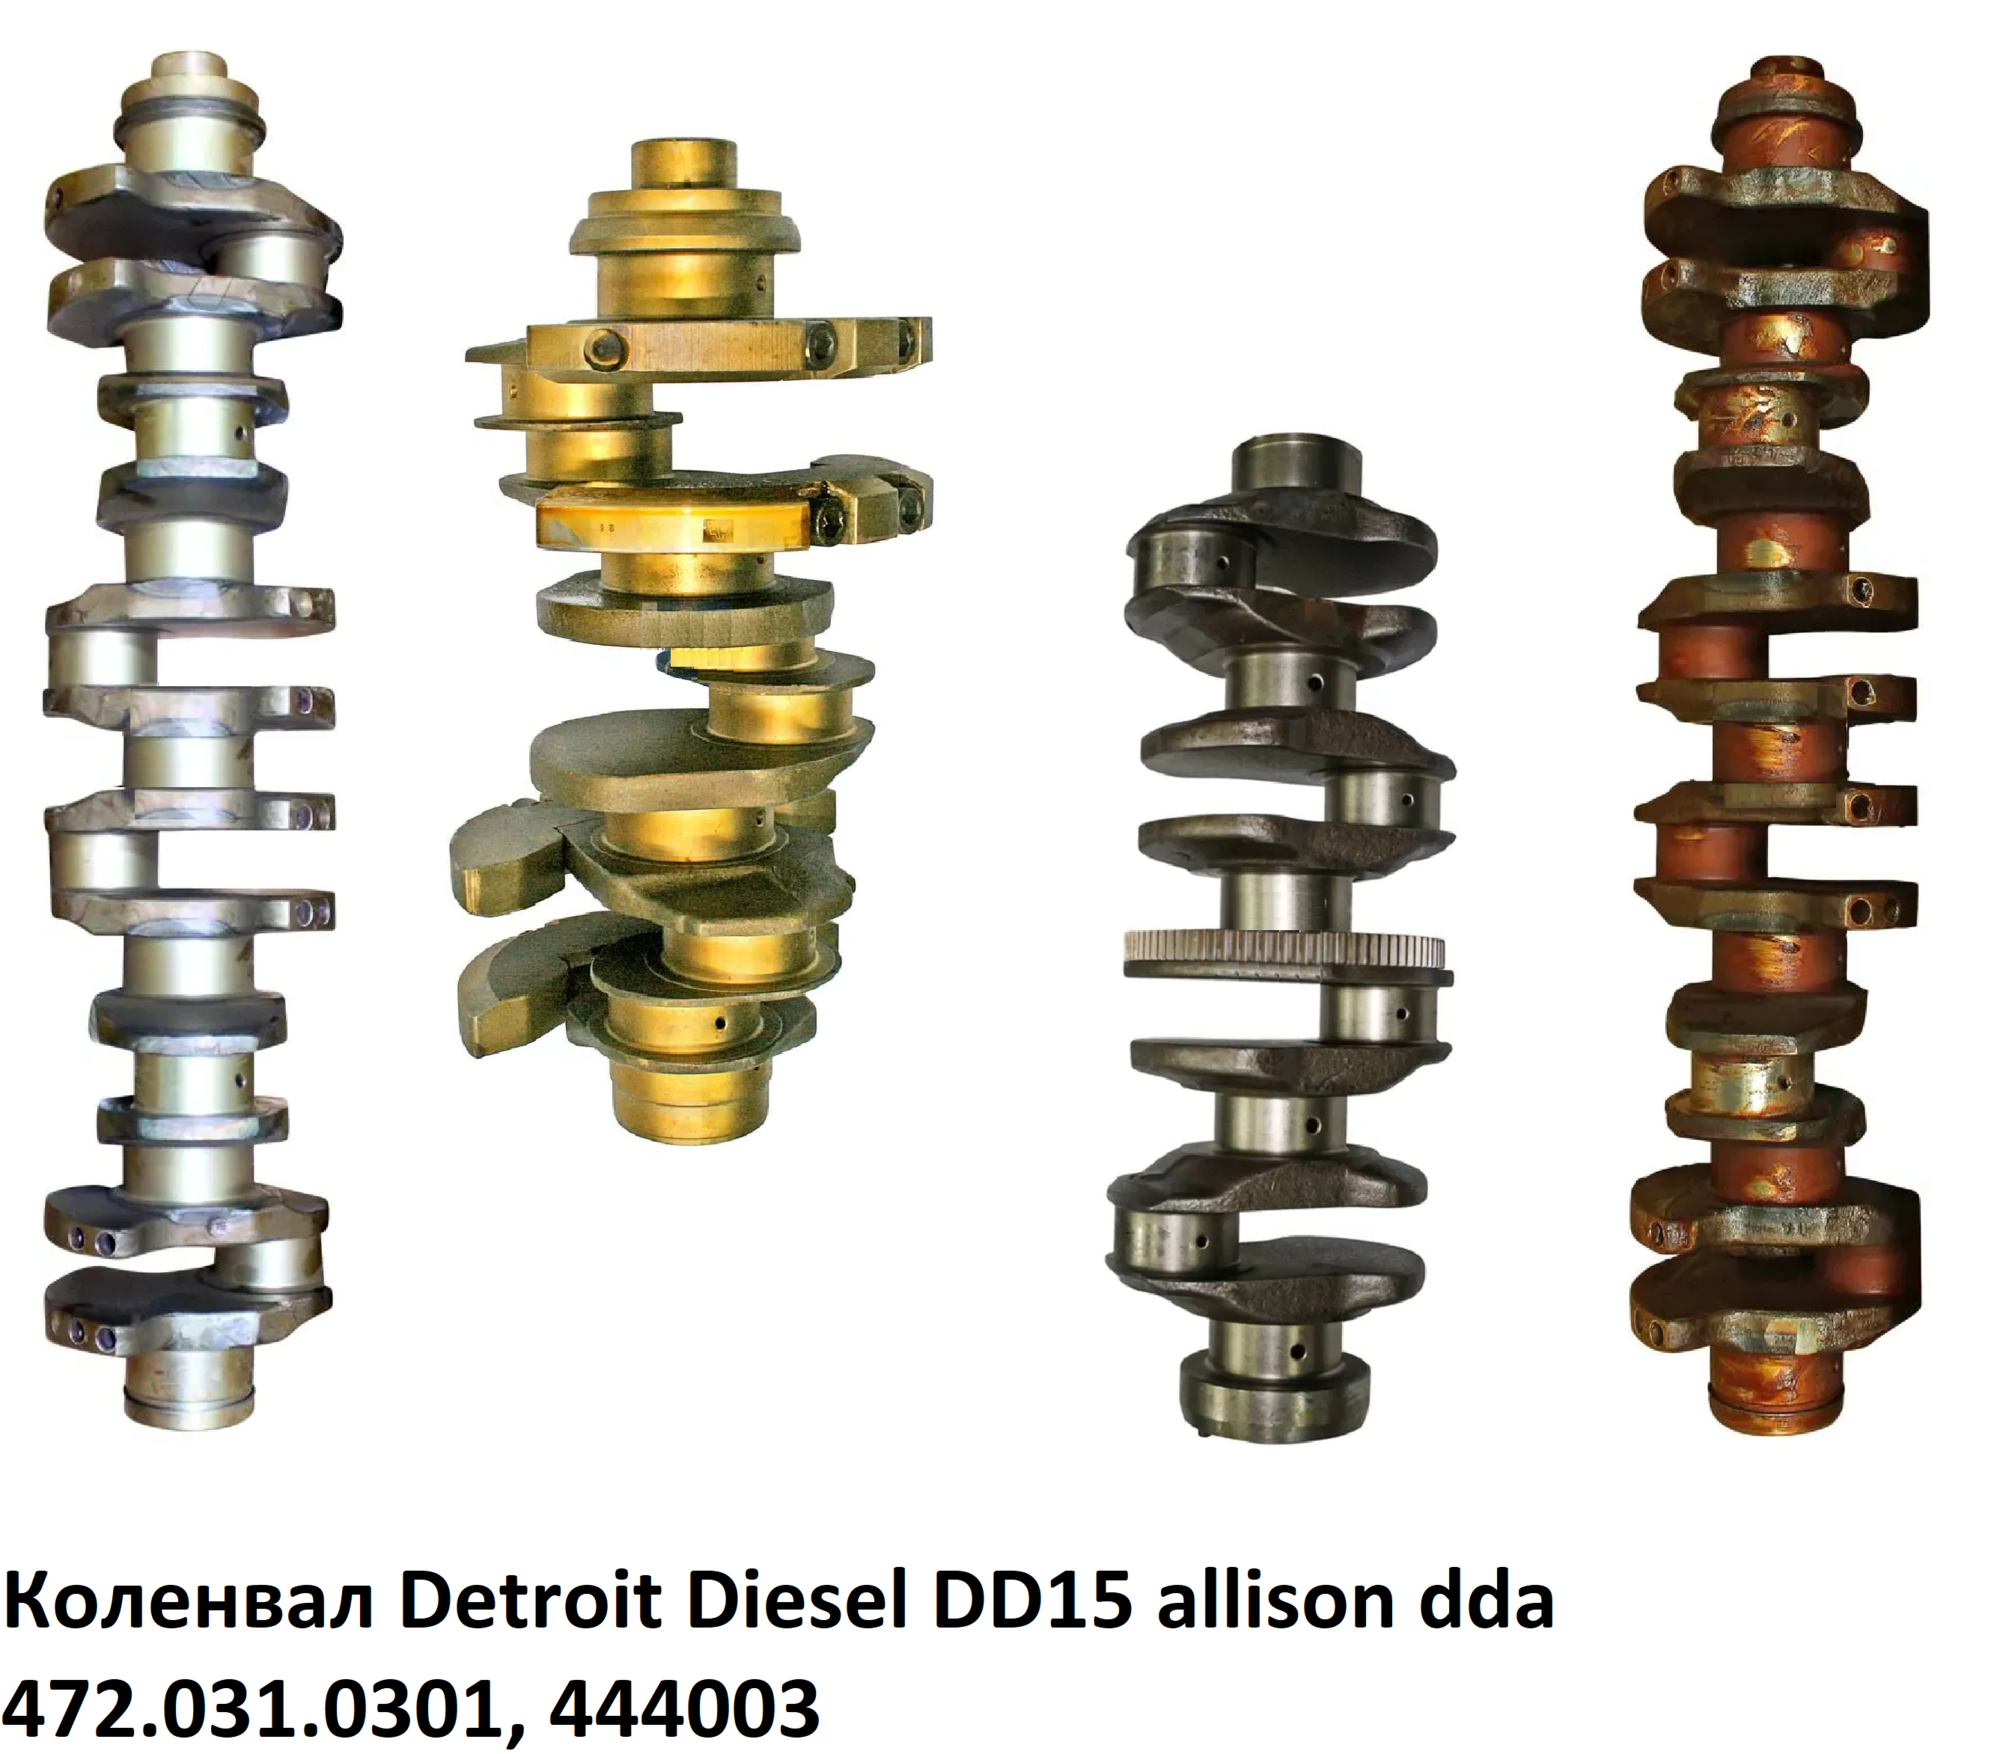 Коленвал Detroit Diesel DD15 allison dda 472.031.0301, 444003, 4720310301